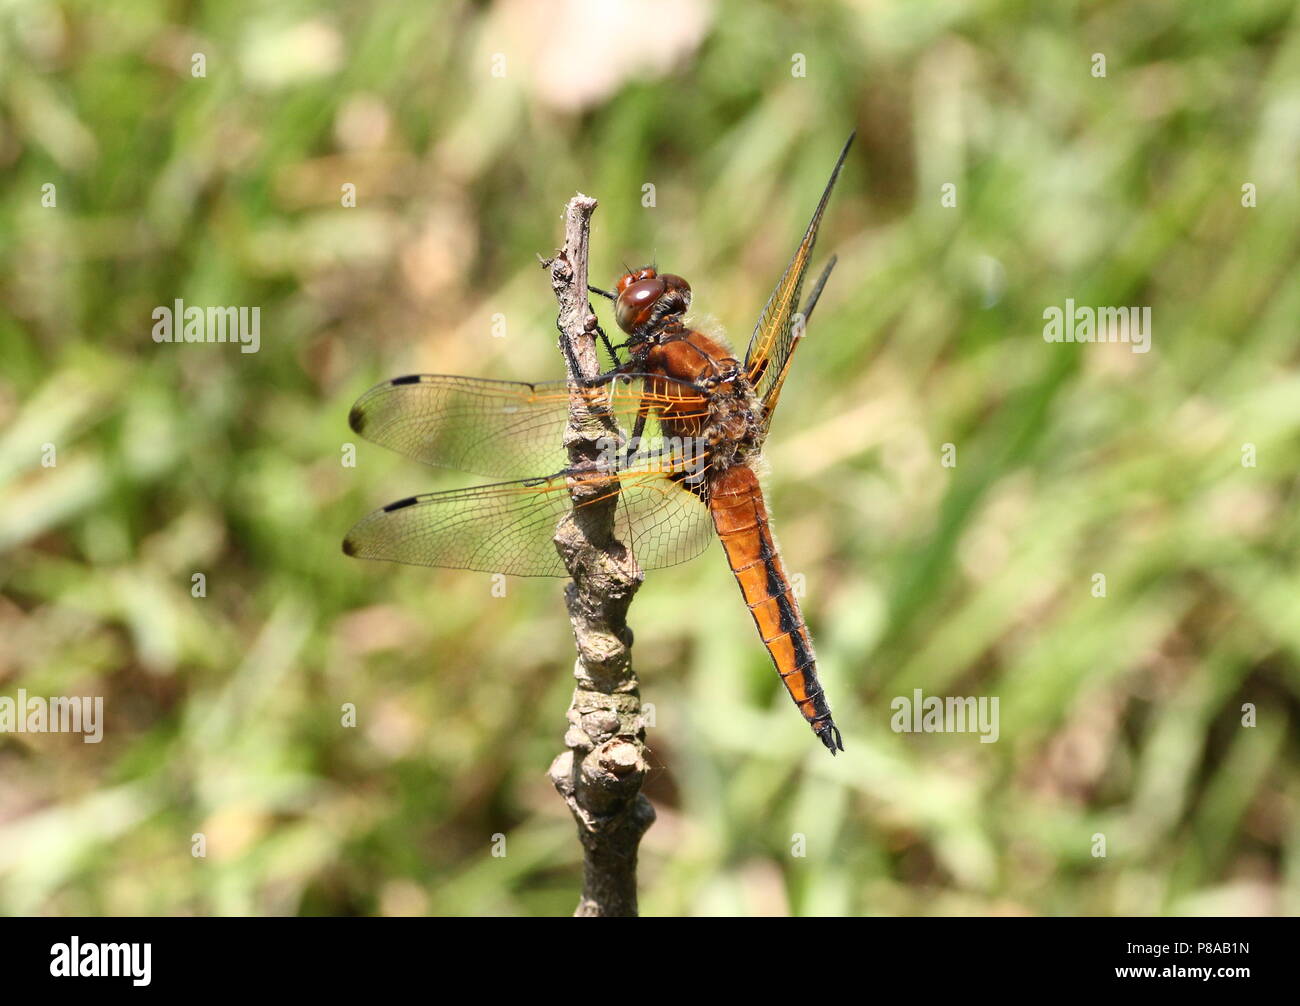 Unión escasos chaser dragonfly (Libellula fulva) en primer plano Foto de stock